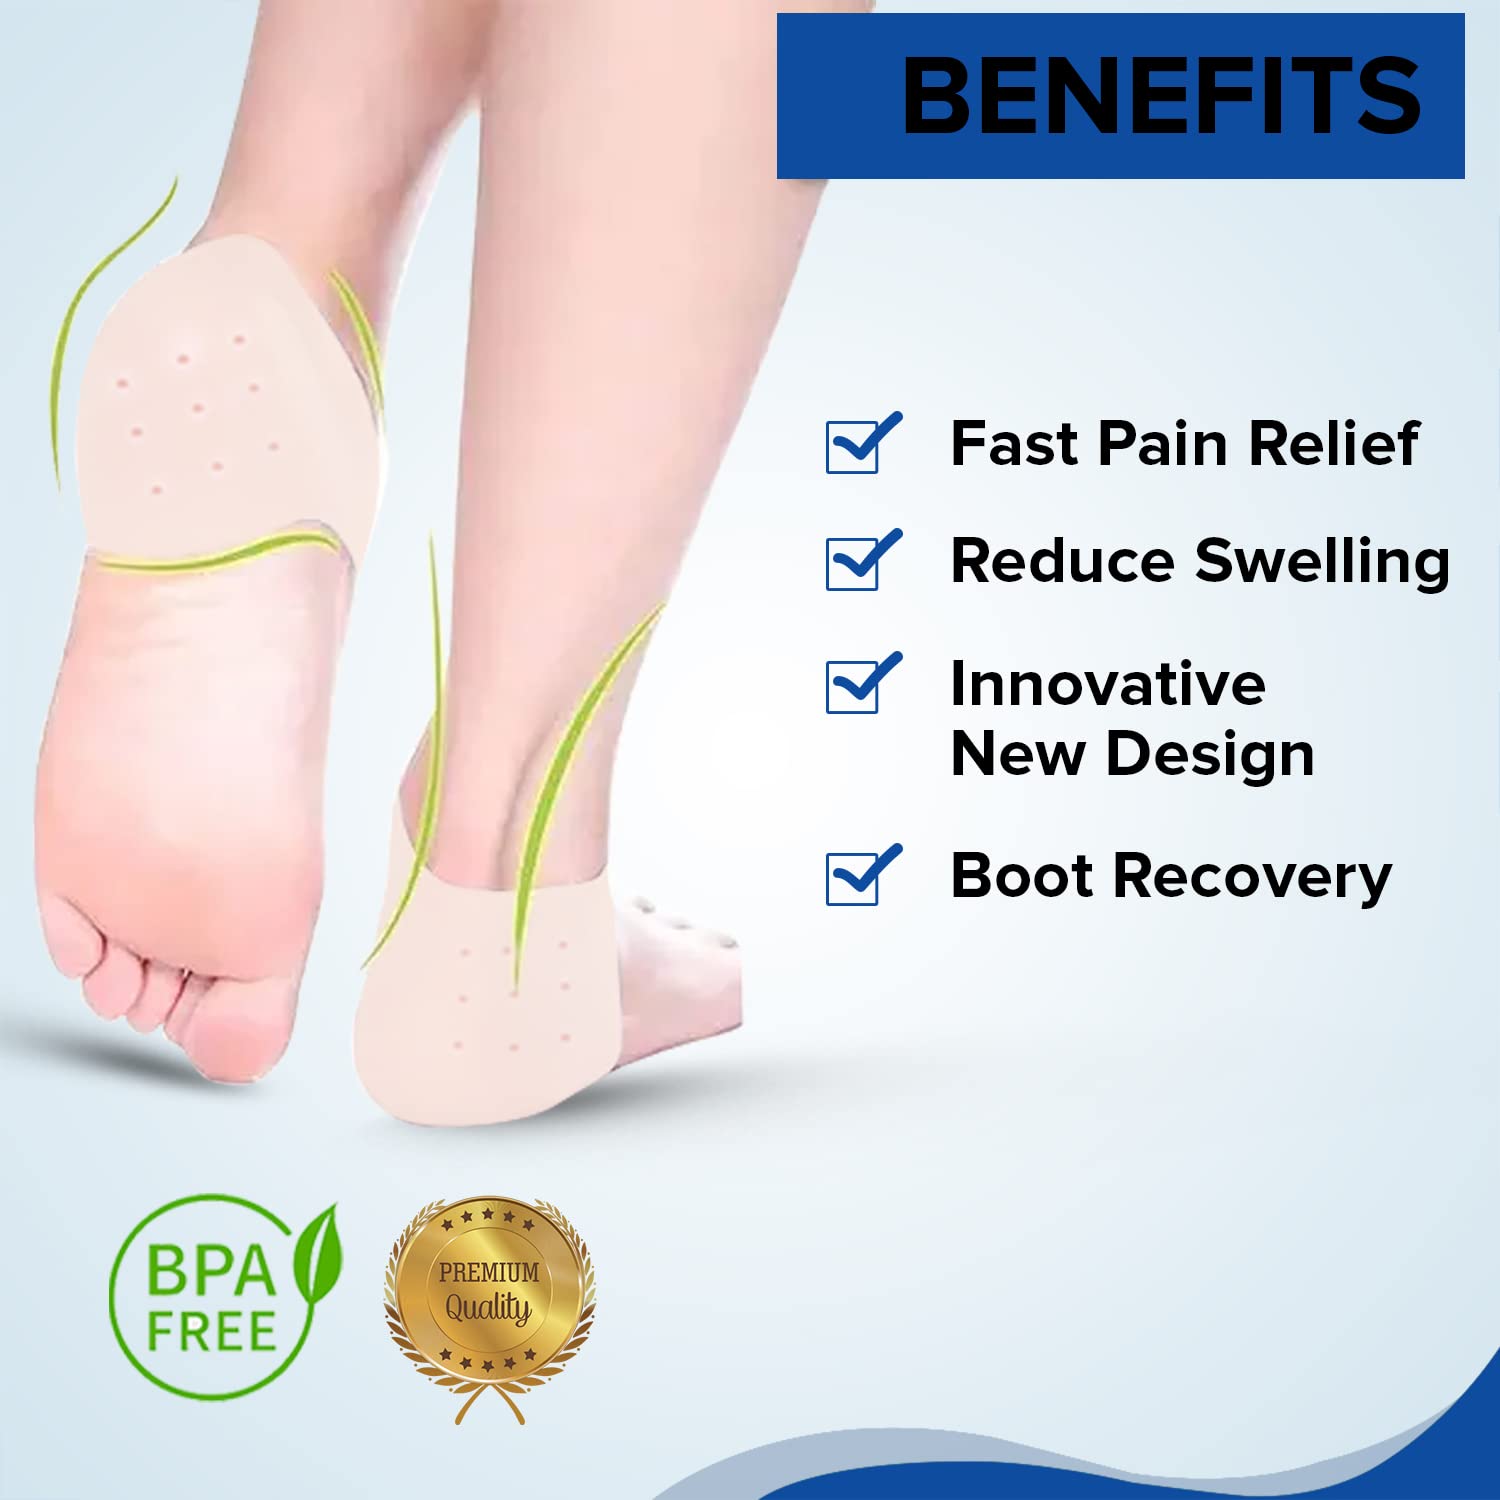 Dr Foot Anti Crack Silicone Gel Heel Pad Socks | For Heel Swelling Pain Relief, Dry Hard, Cracked Heels Repair Cream Foot Care | For Both Men & Women | Half-length - 1 Pair (Free Size) (Pack of 5)